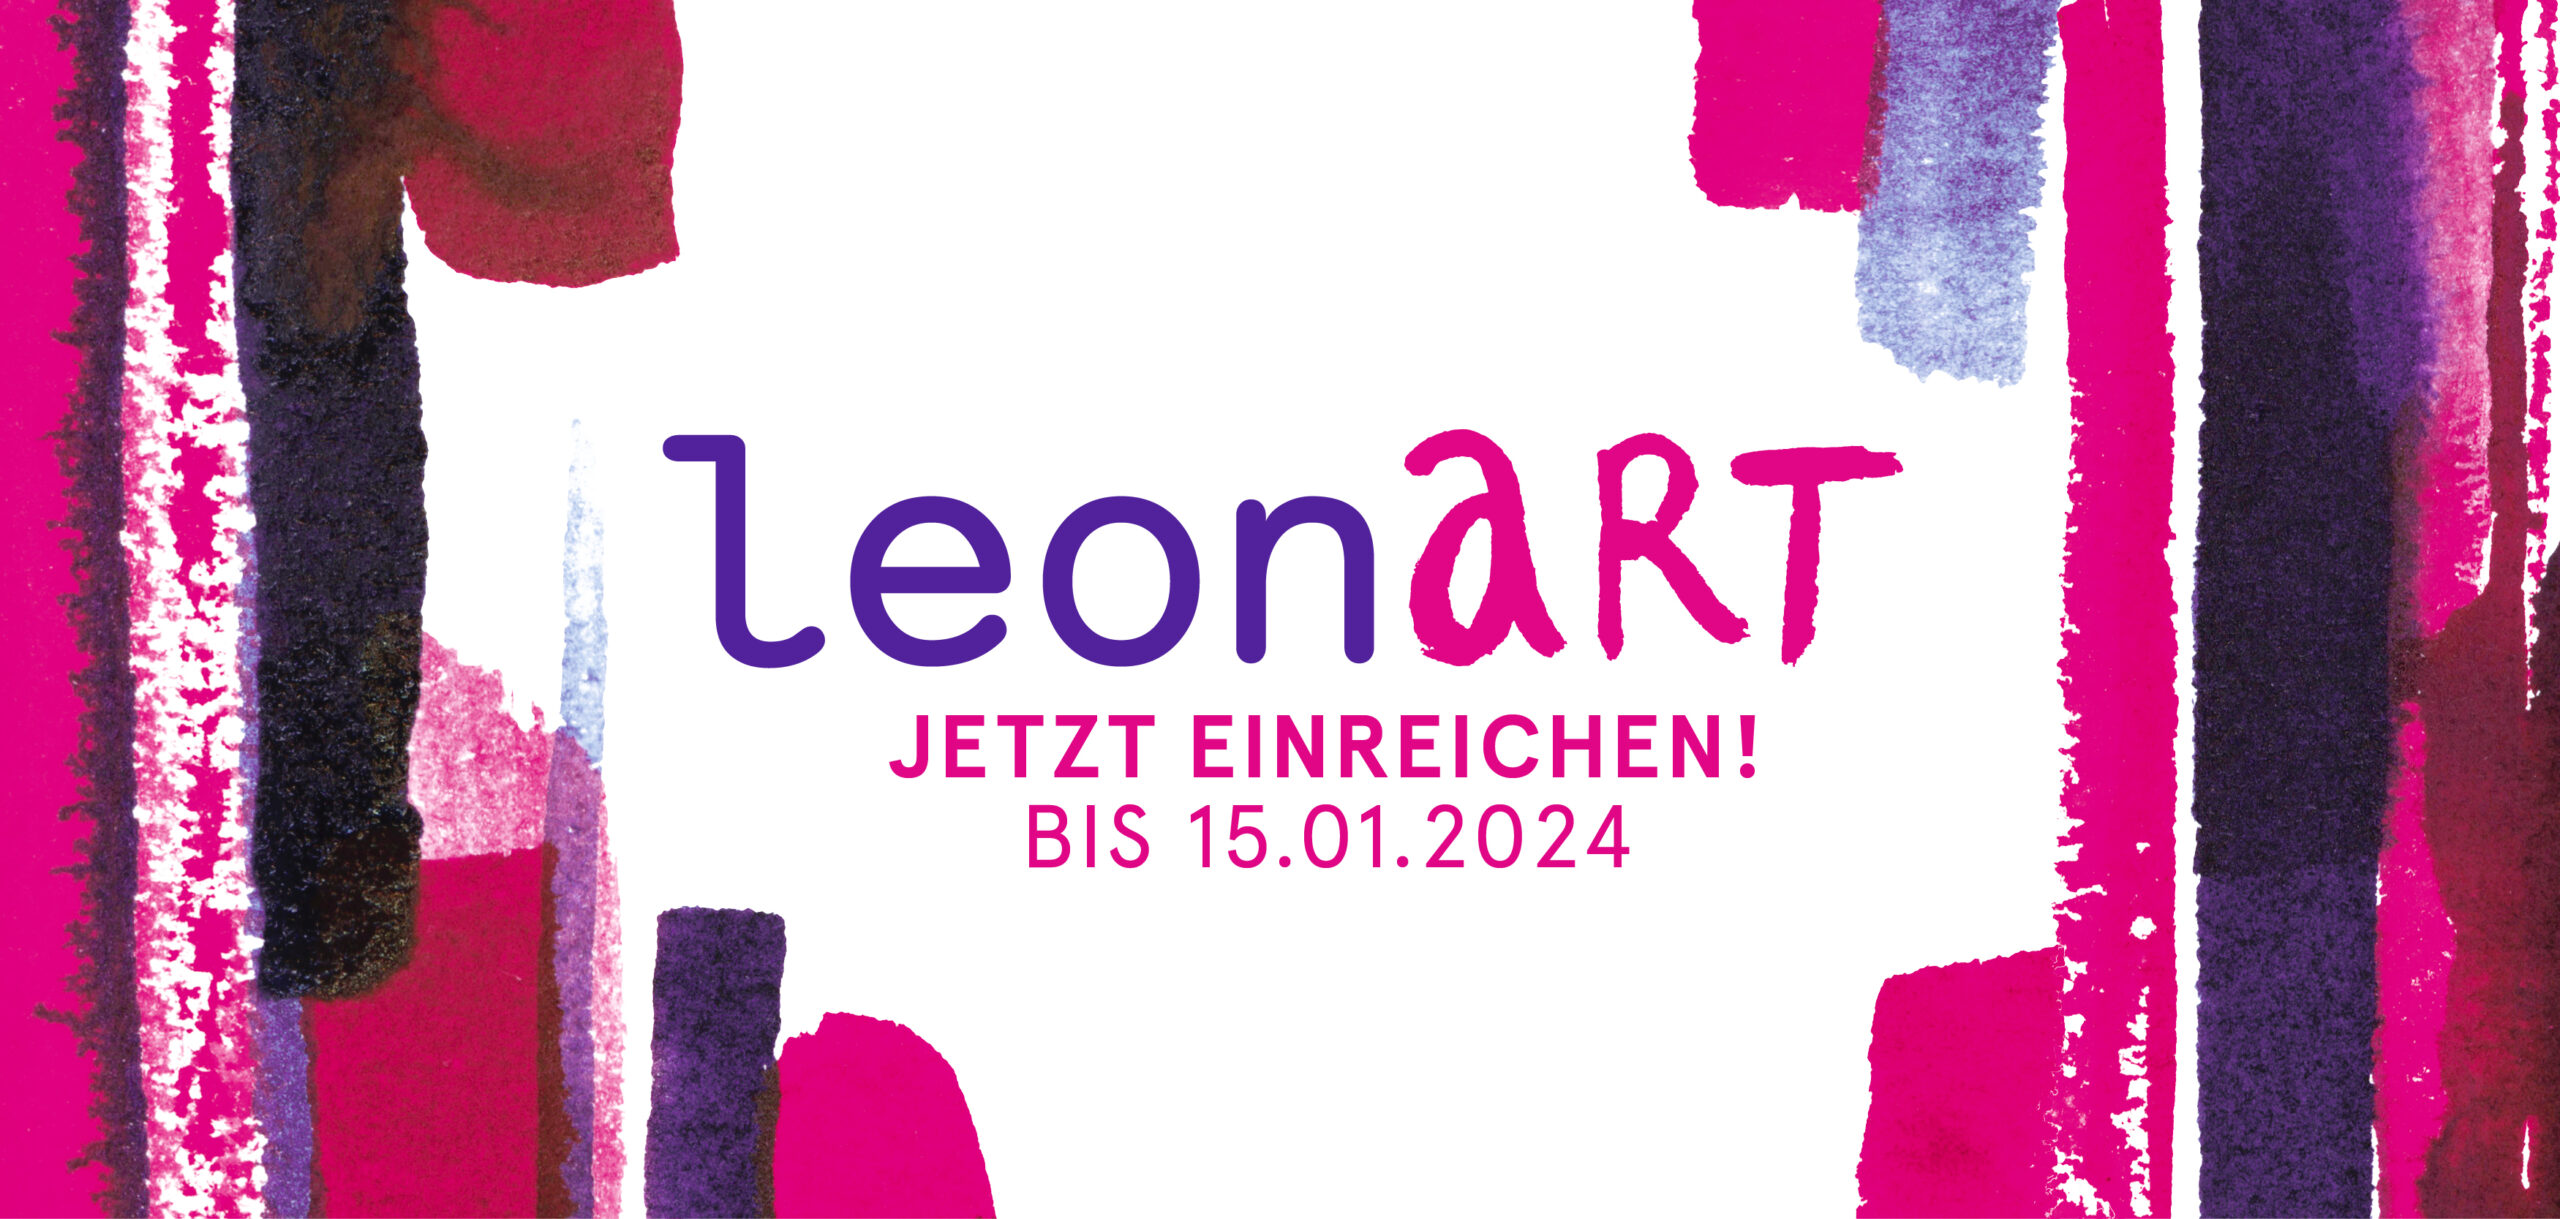 Hauptsujet Ausschreibung leonART 2024 | Fotocredit Zunder & Katja Seifert